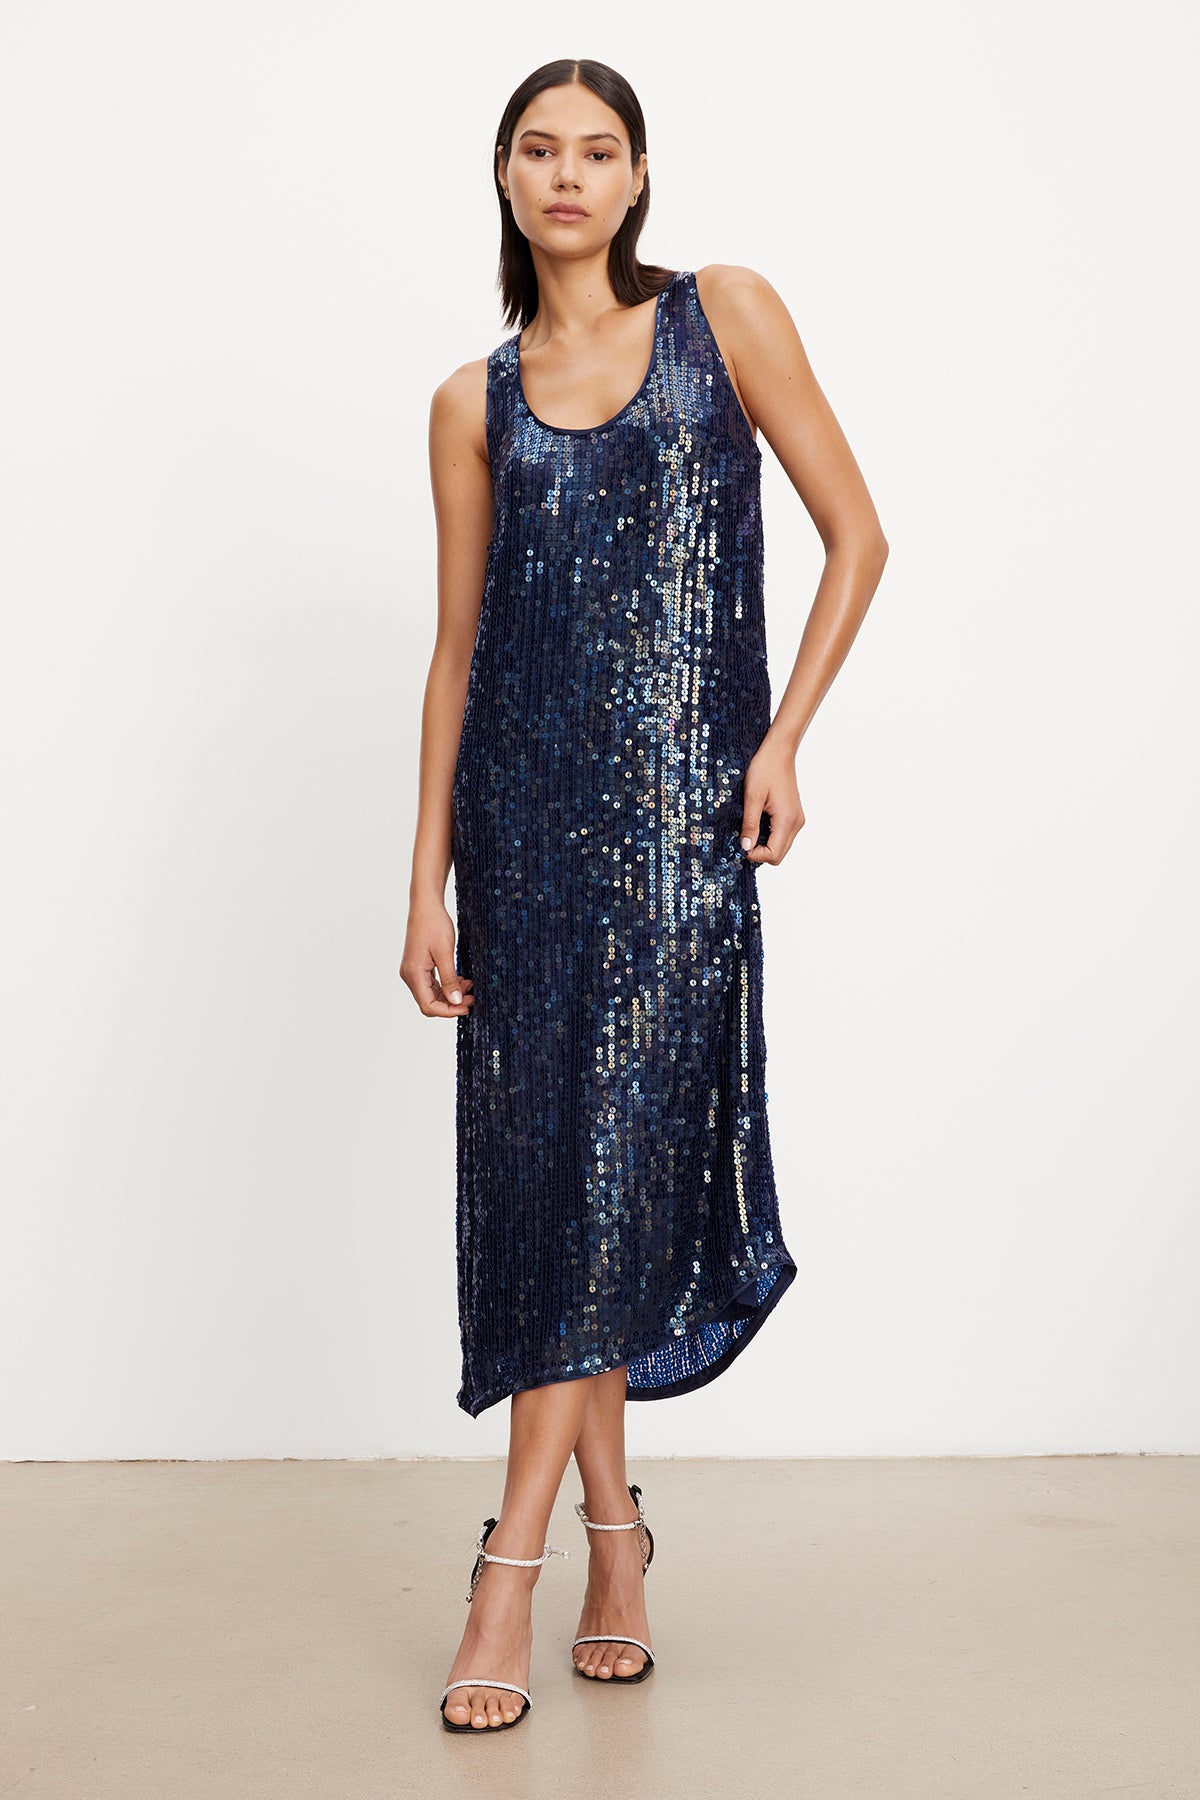 A model wearing an elegant Velvet by Graham & Spencer Alena Sequin Tank Dress.-35577745408193